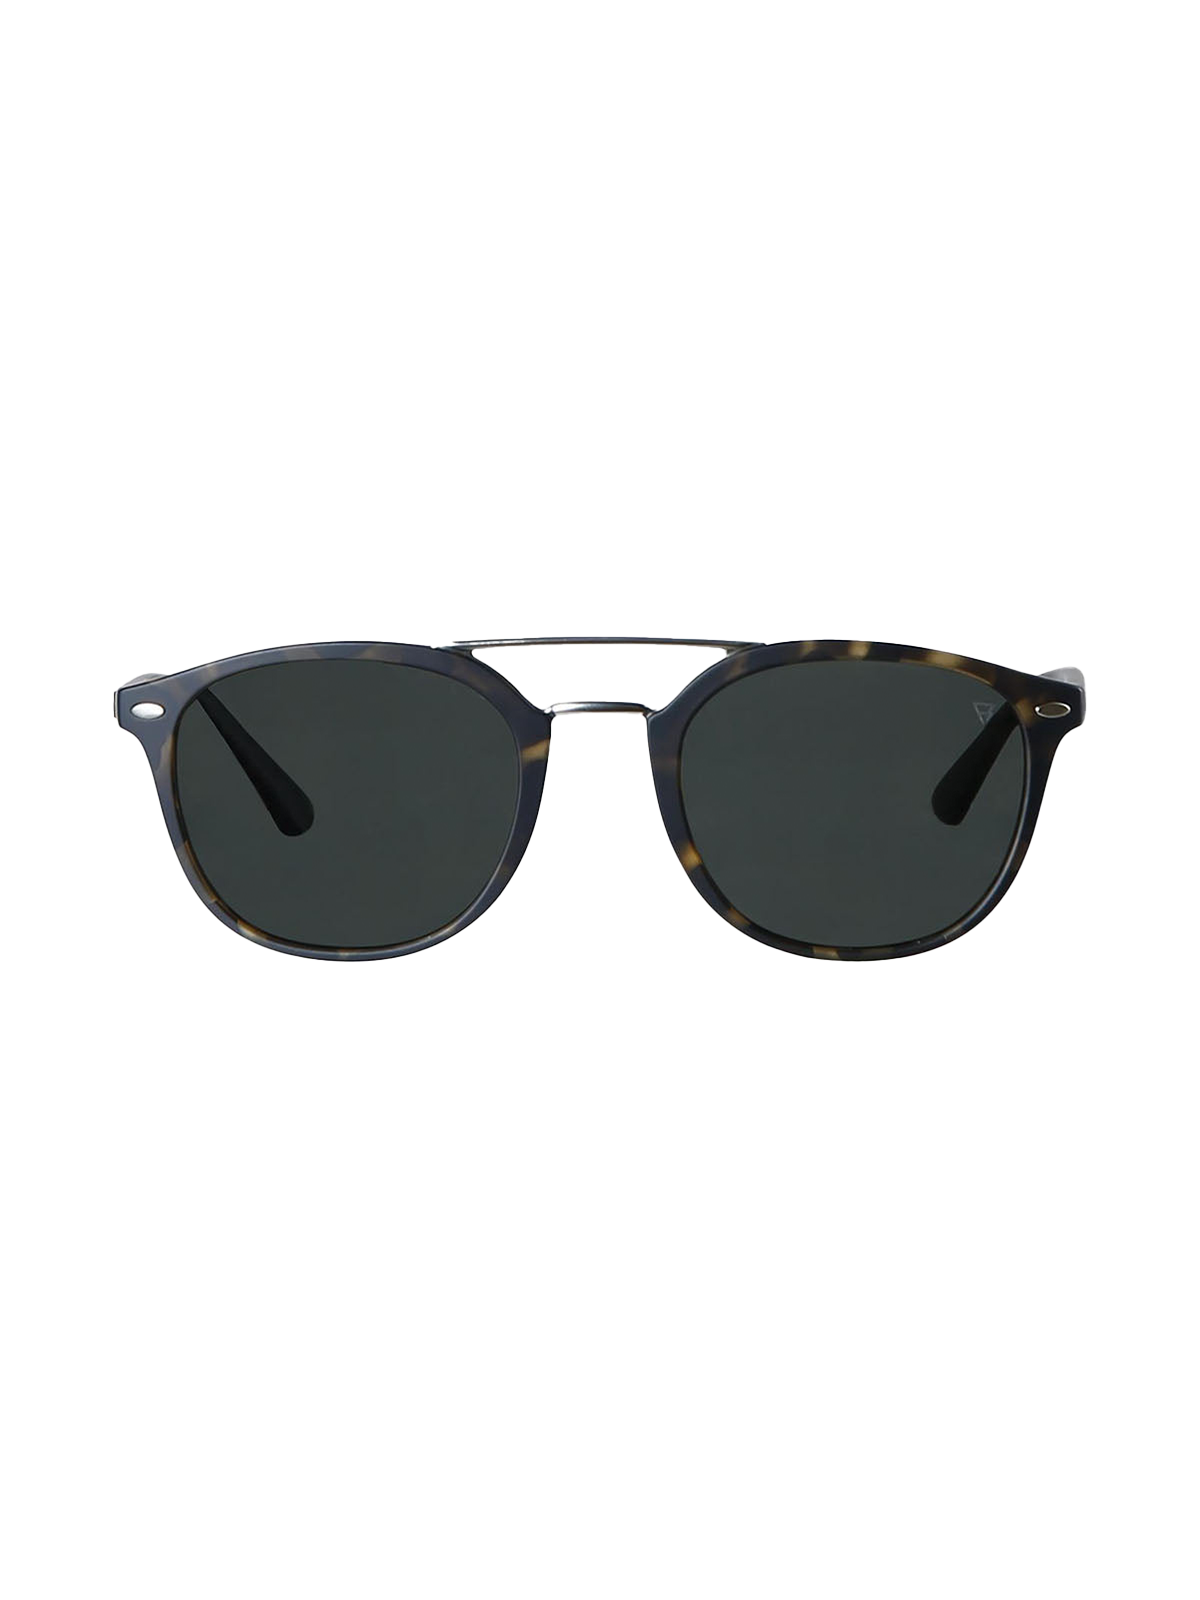 Michigan 1 Unisex Sunglasses | Brown